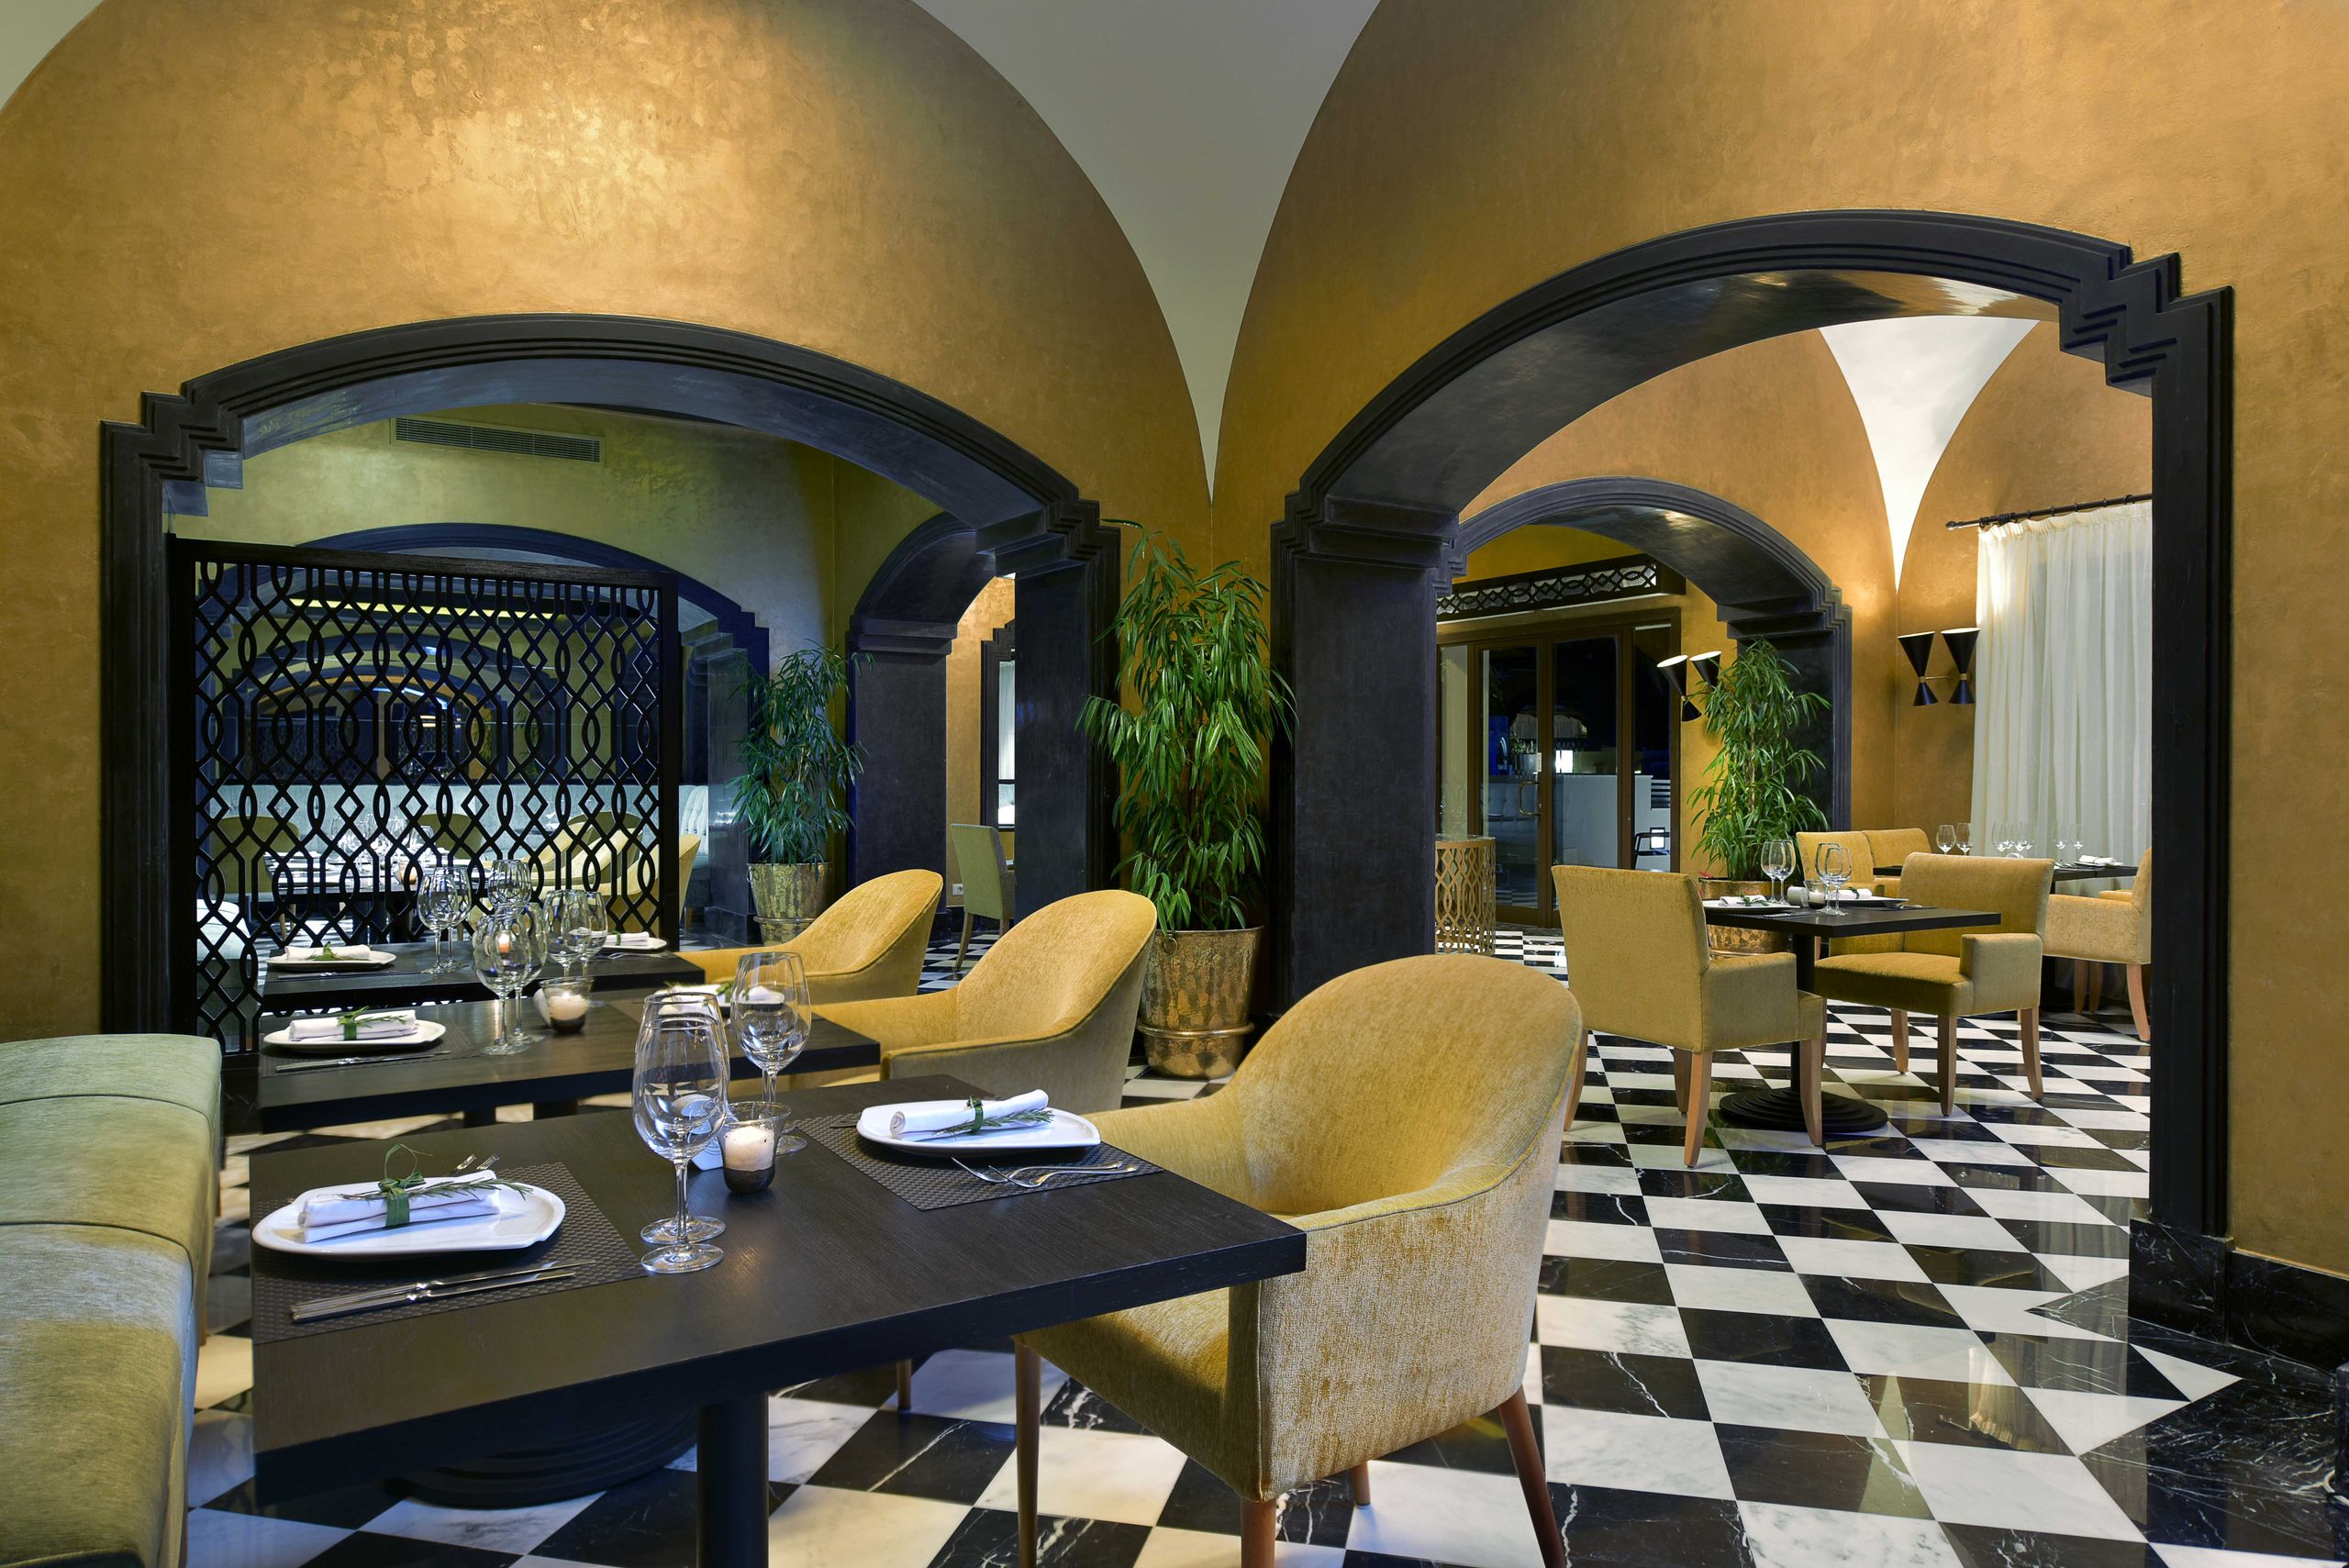 Steigenberger Alcazar, Sharm El Sheikh, Egypt - La Maison Restaurant